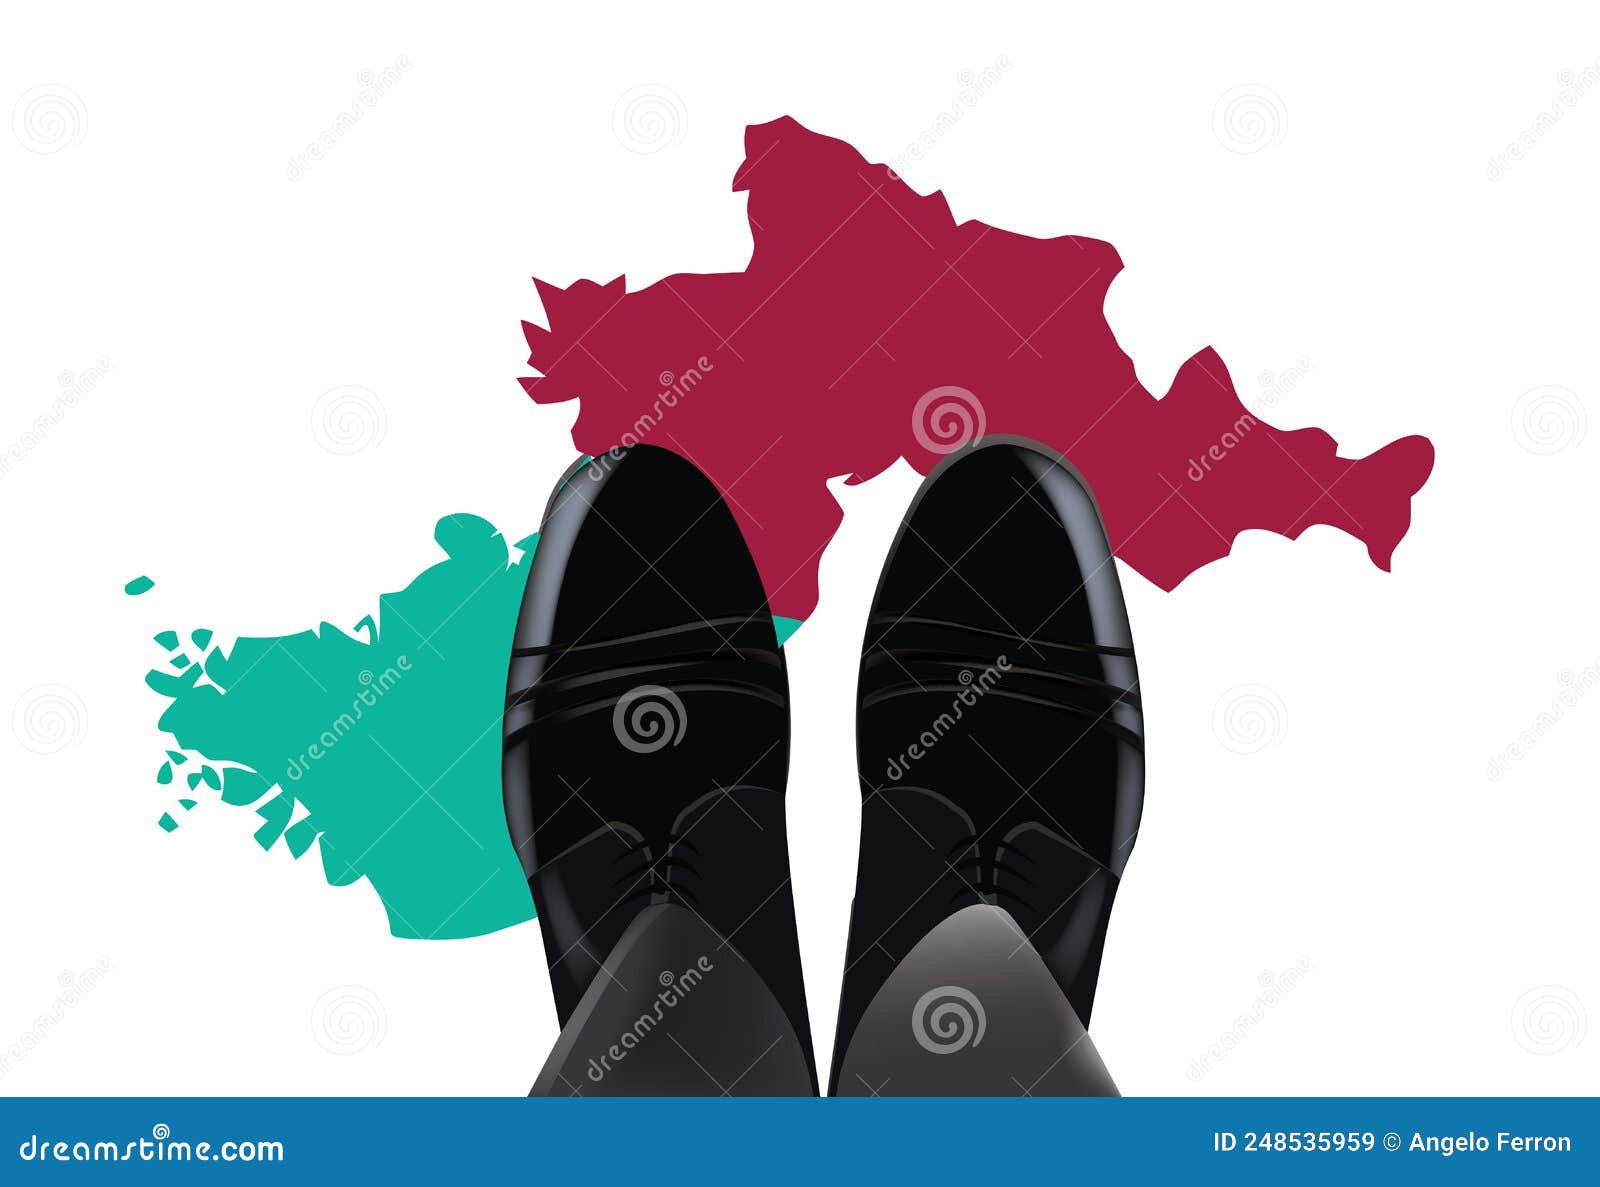 feet with shiny shoes over north korea-